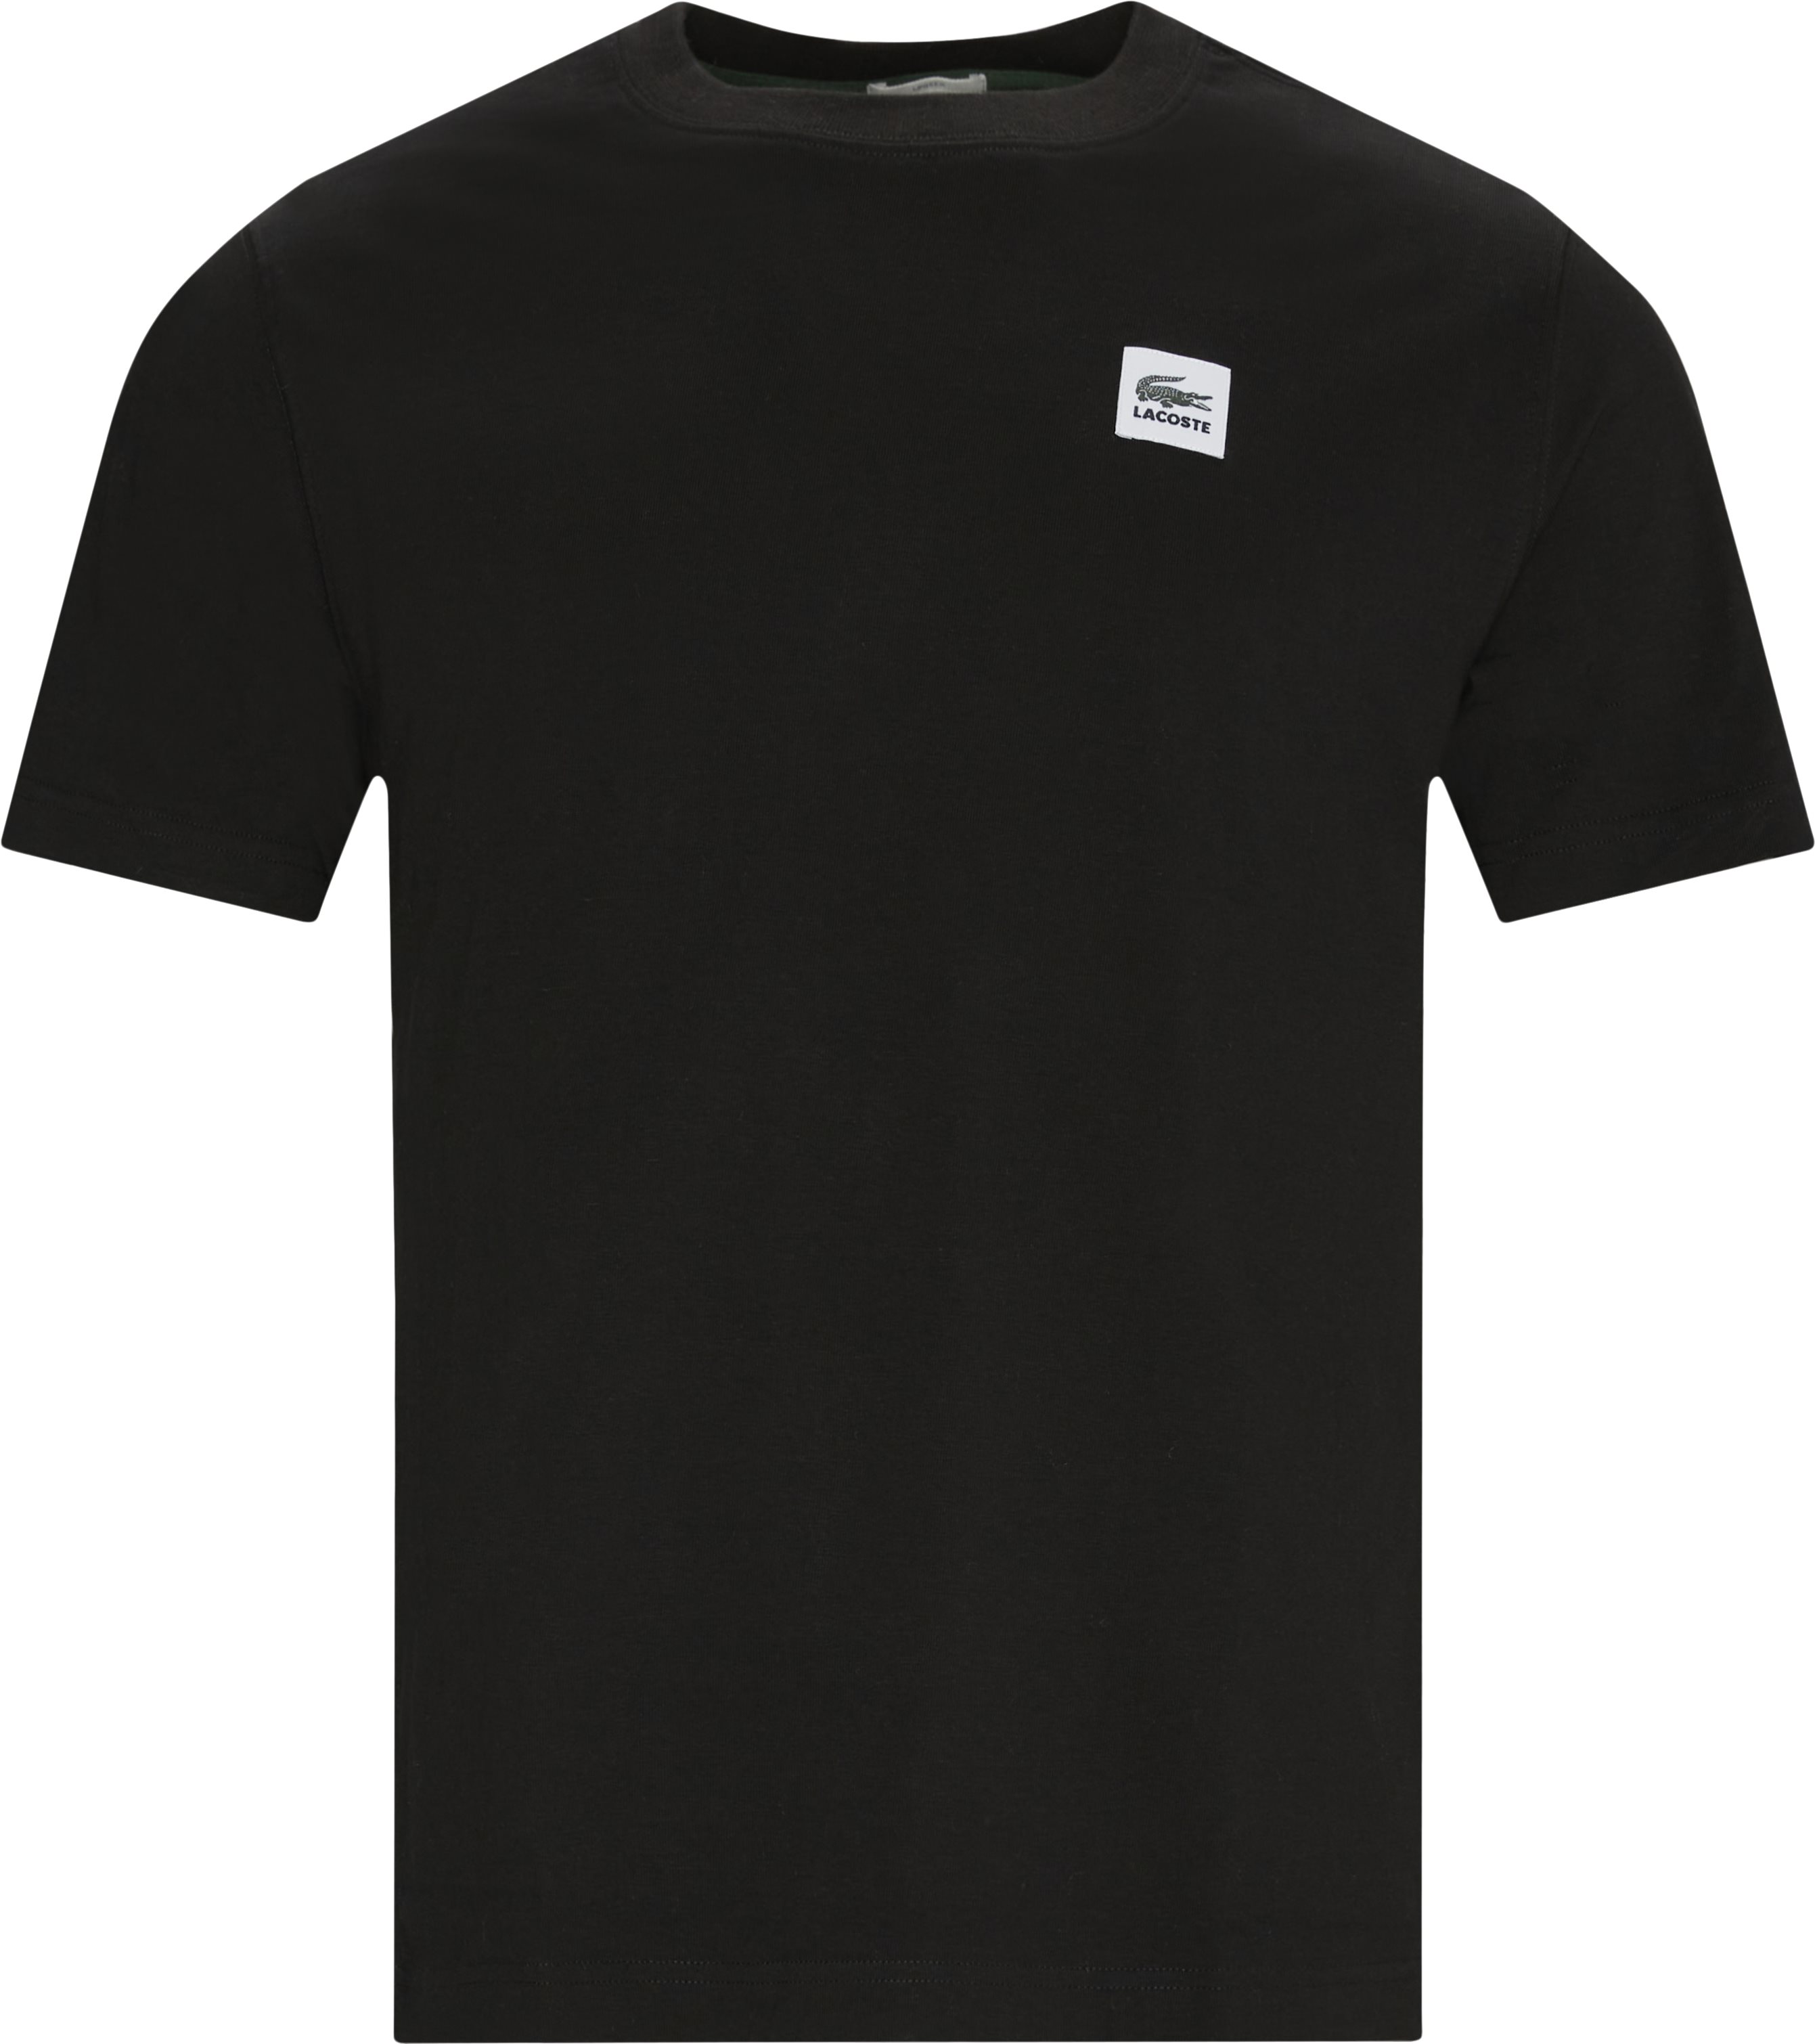 Logo Tee - T-shirts - Regular fit - Black